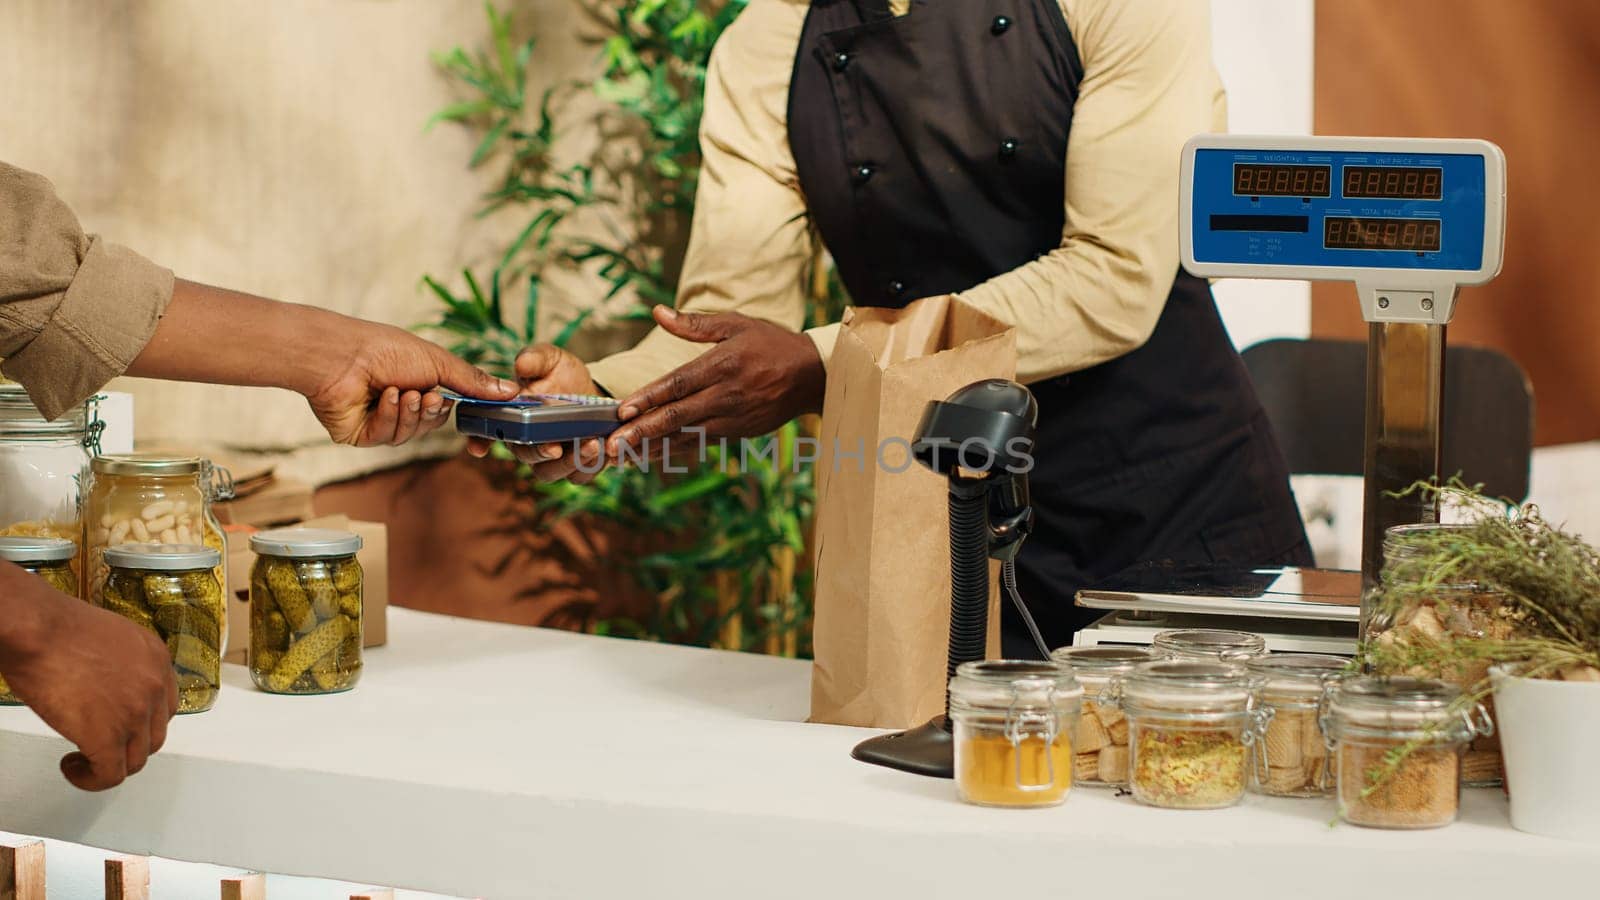 Vegan customer using card at pos to pay for natural food alternatives by DCStudio